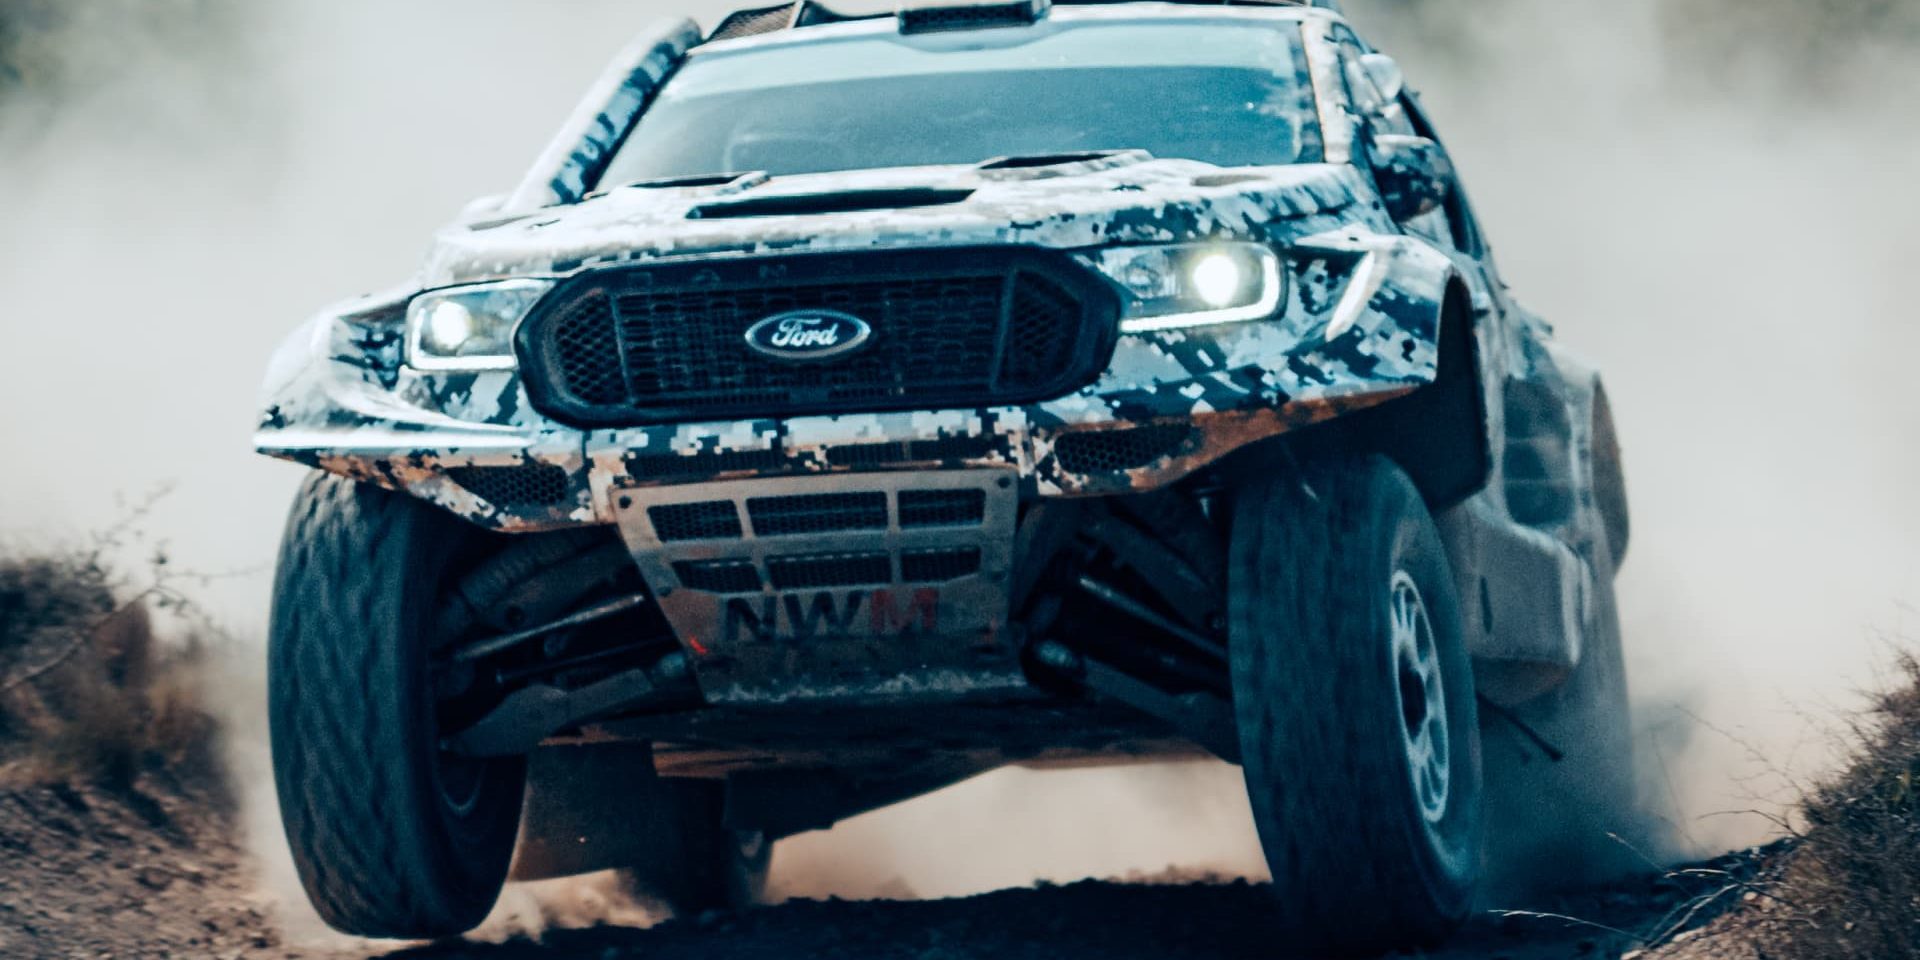 Ford Ranger to enter Dakar rally in multi-year assault on world’s toughest off-road race